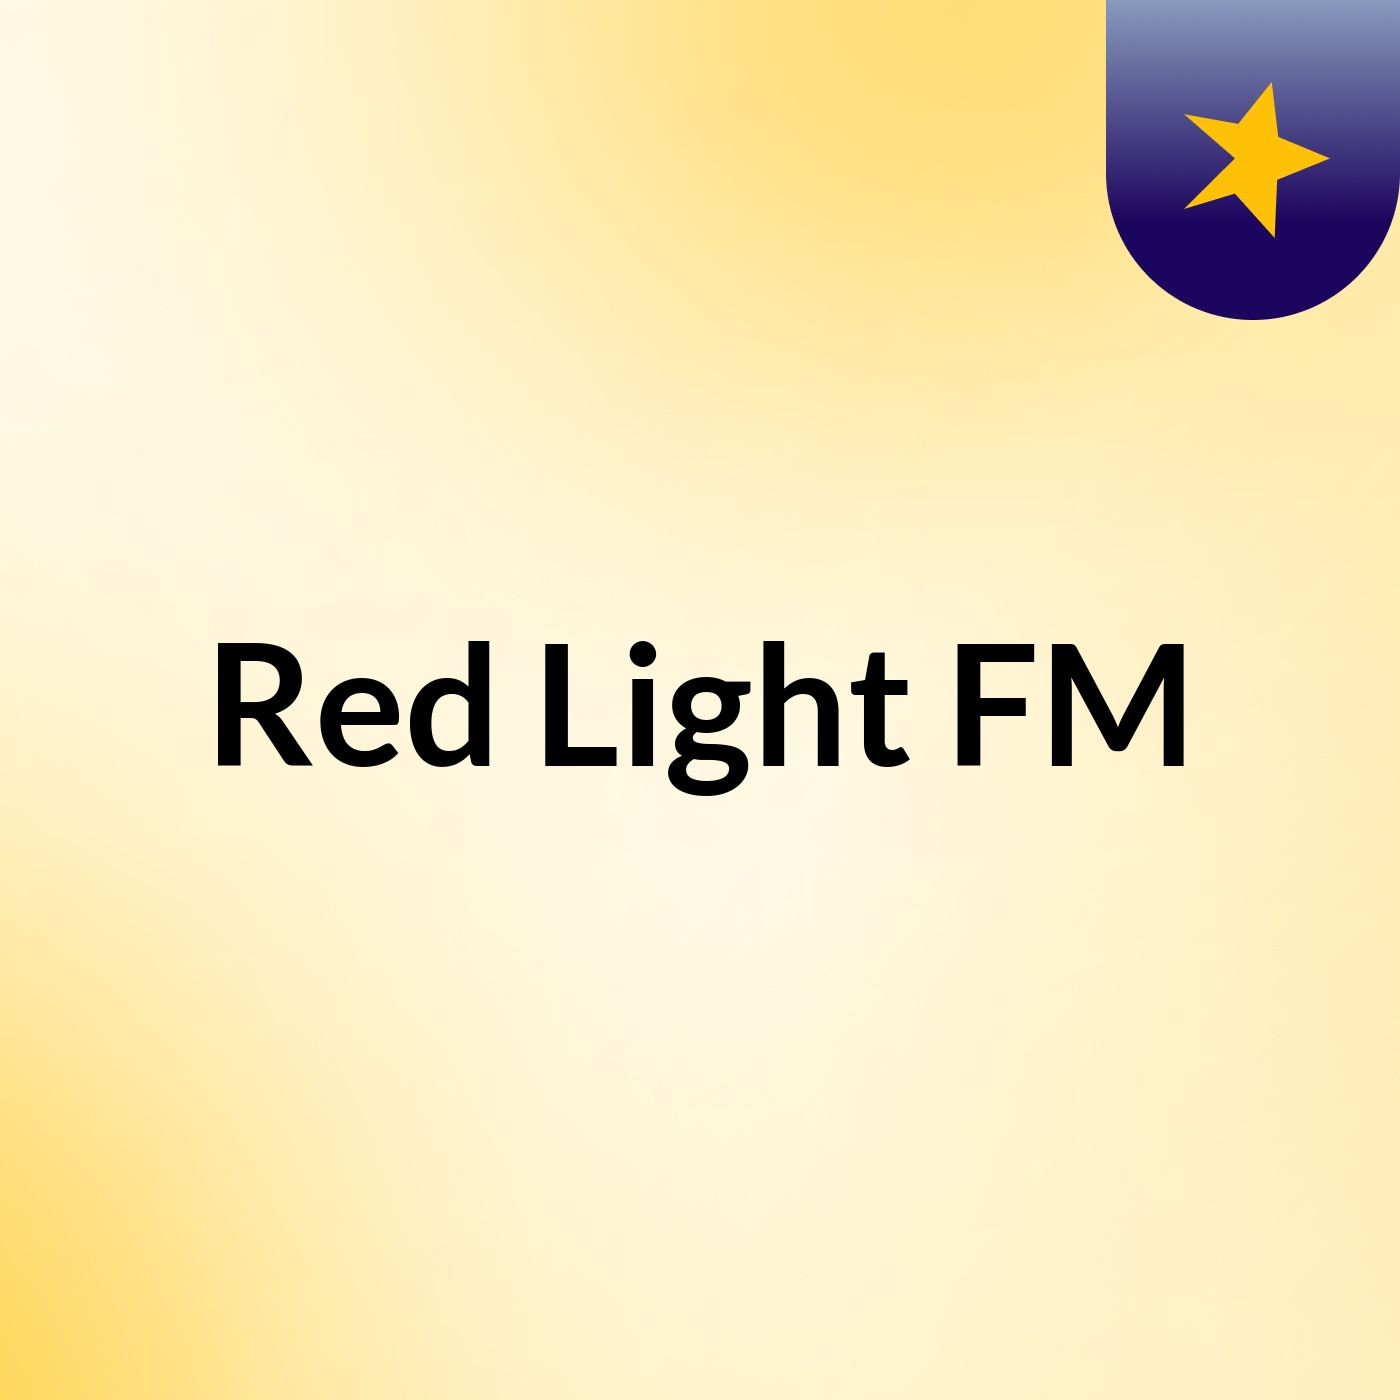 Red Light FM